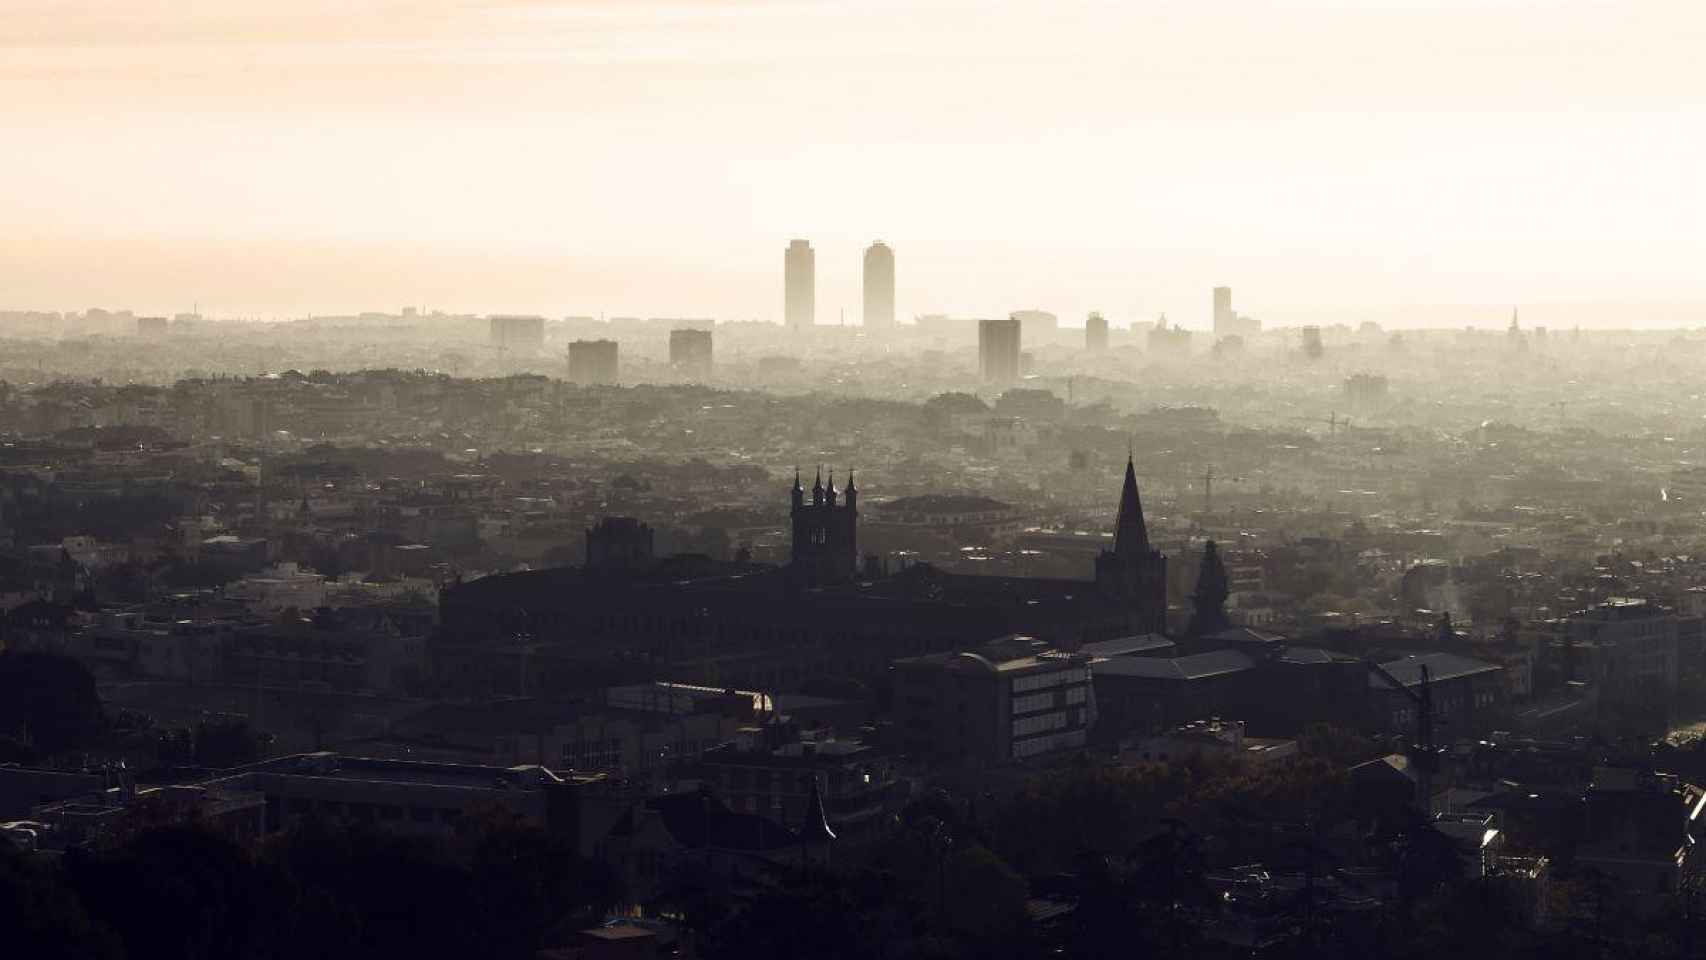 Vista de Barcelona en un día de alto nivel de contaminación atmosférica / EP